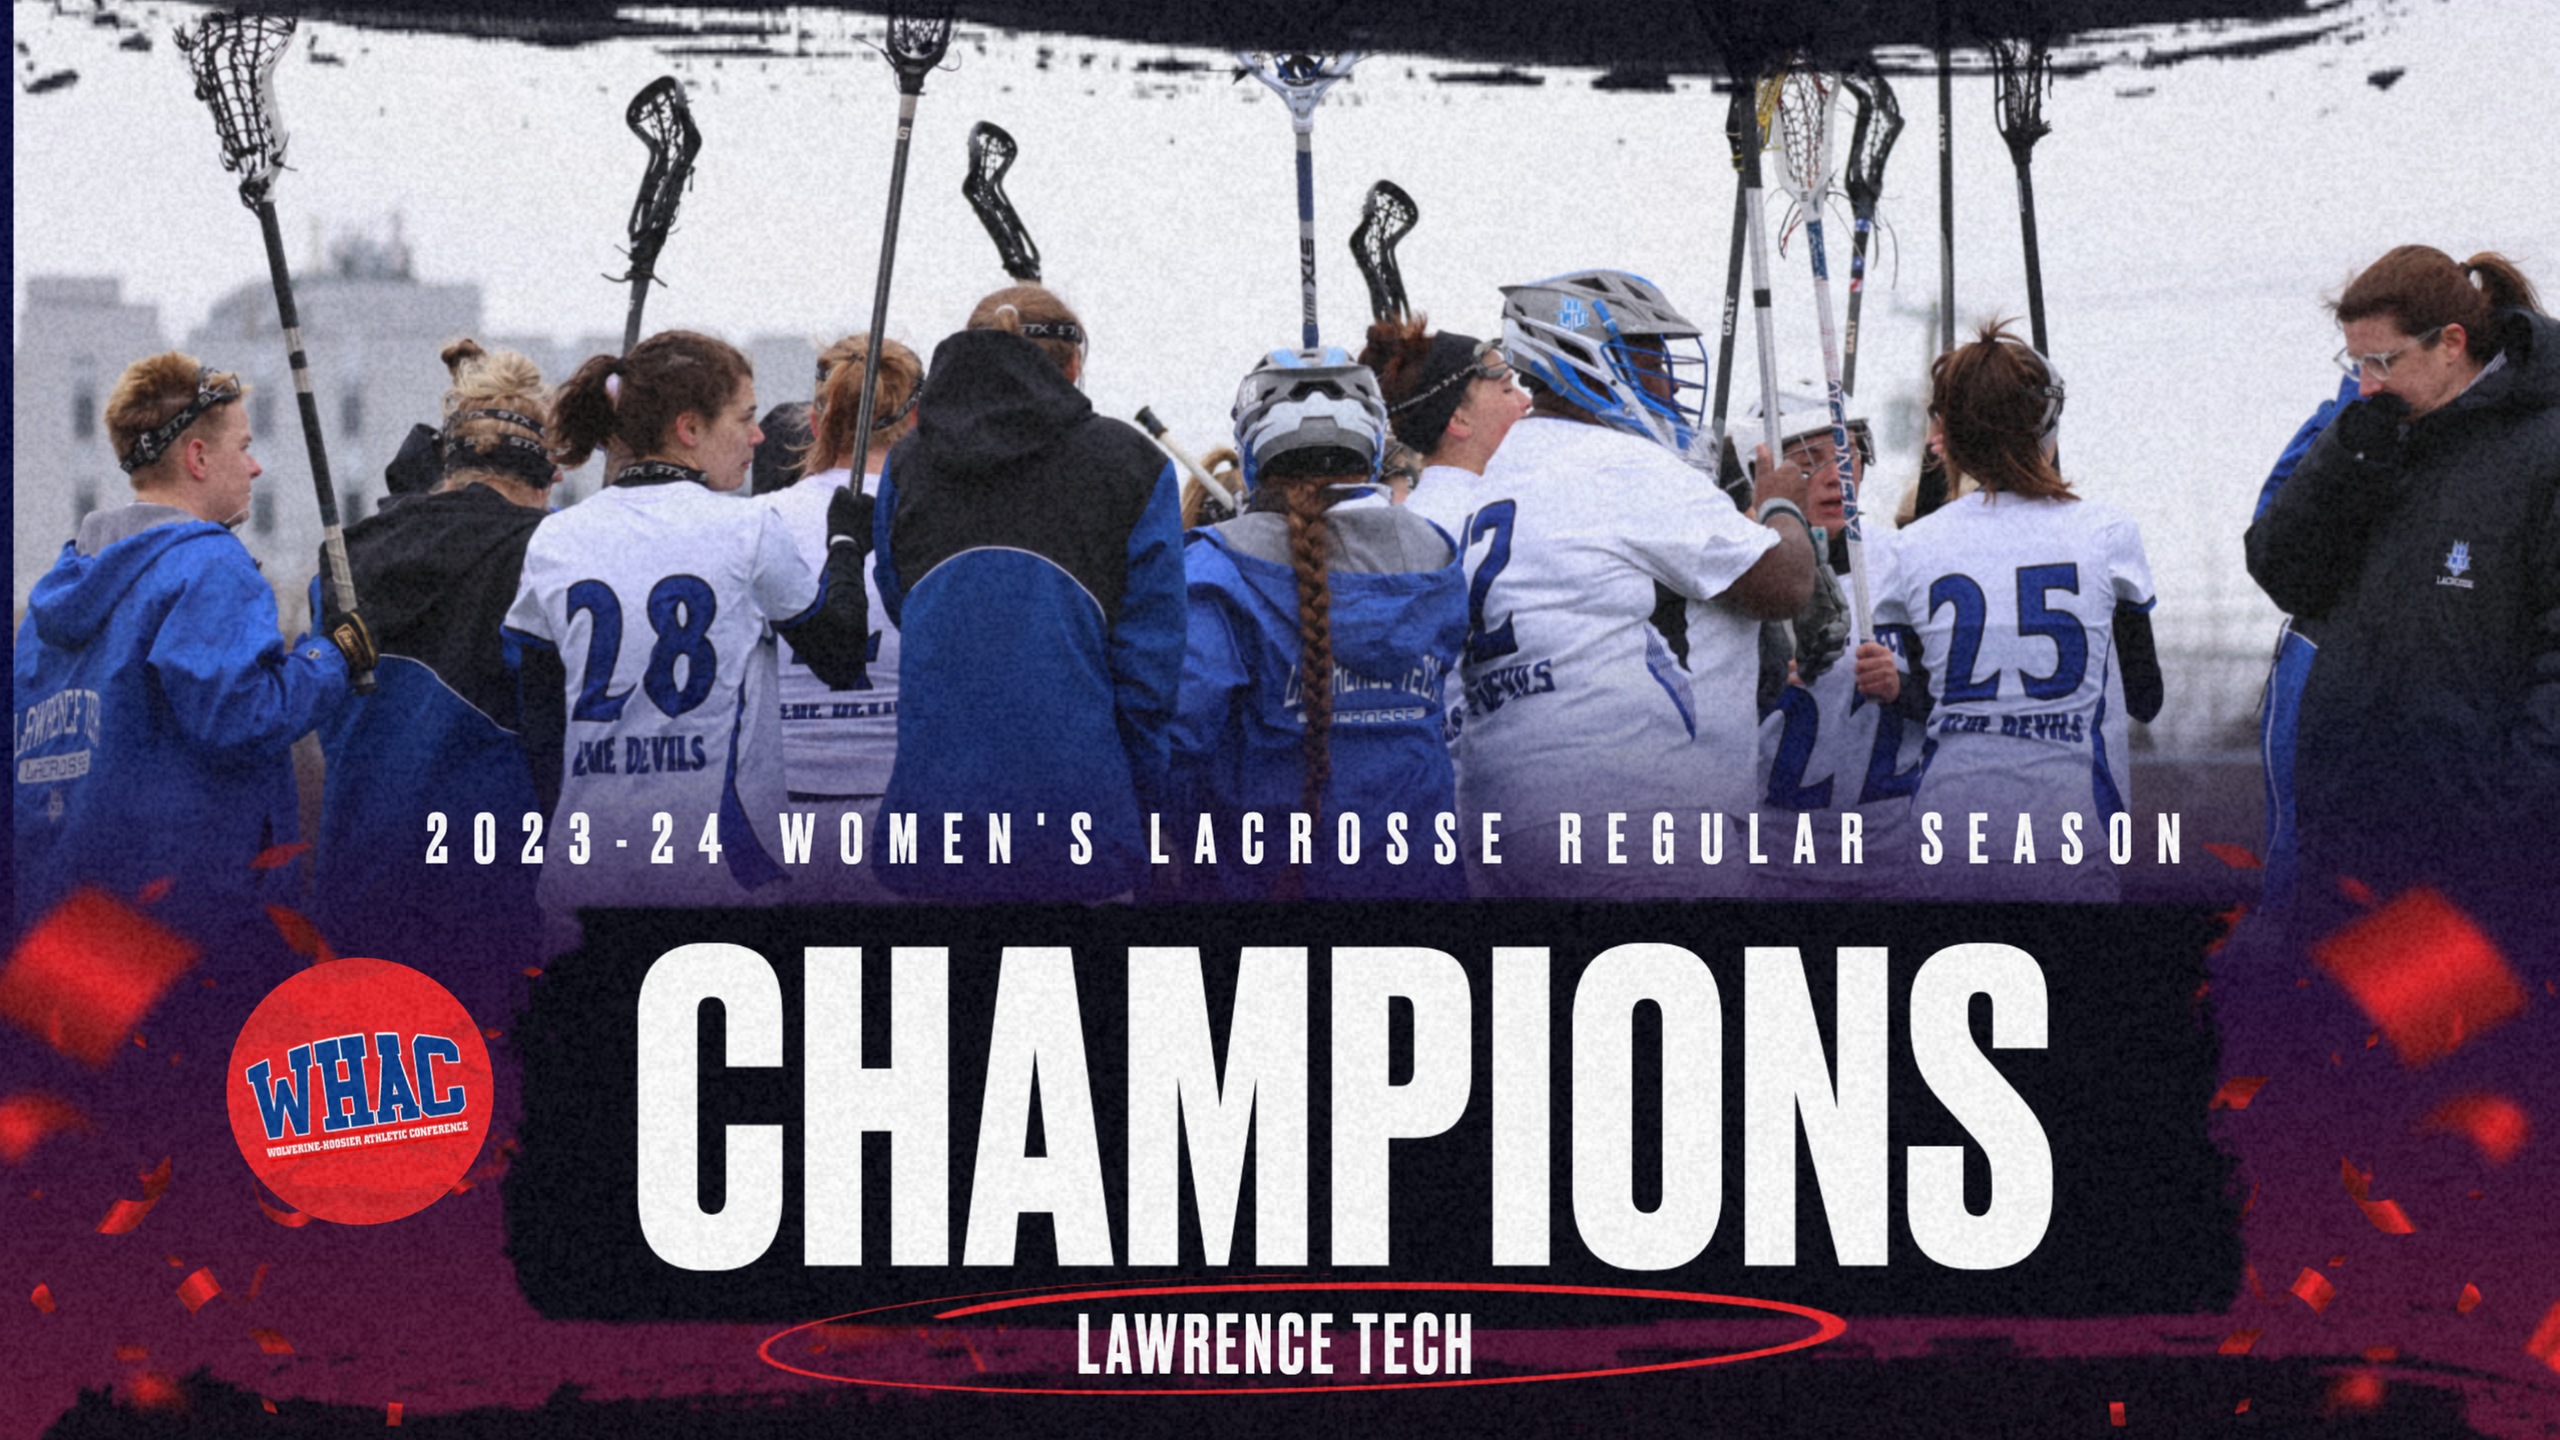 Lawrence Tech Wins Third-Straight Women's Lacrosse Regular Season Championship